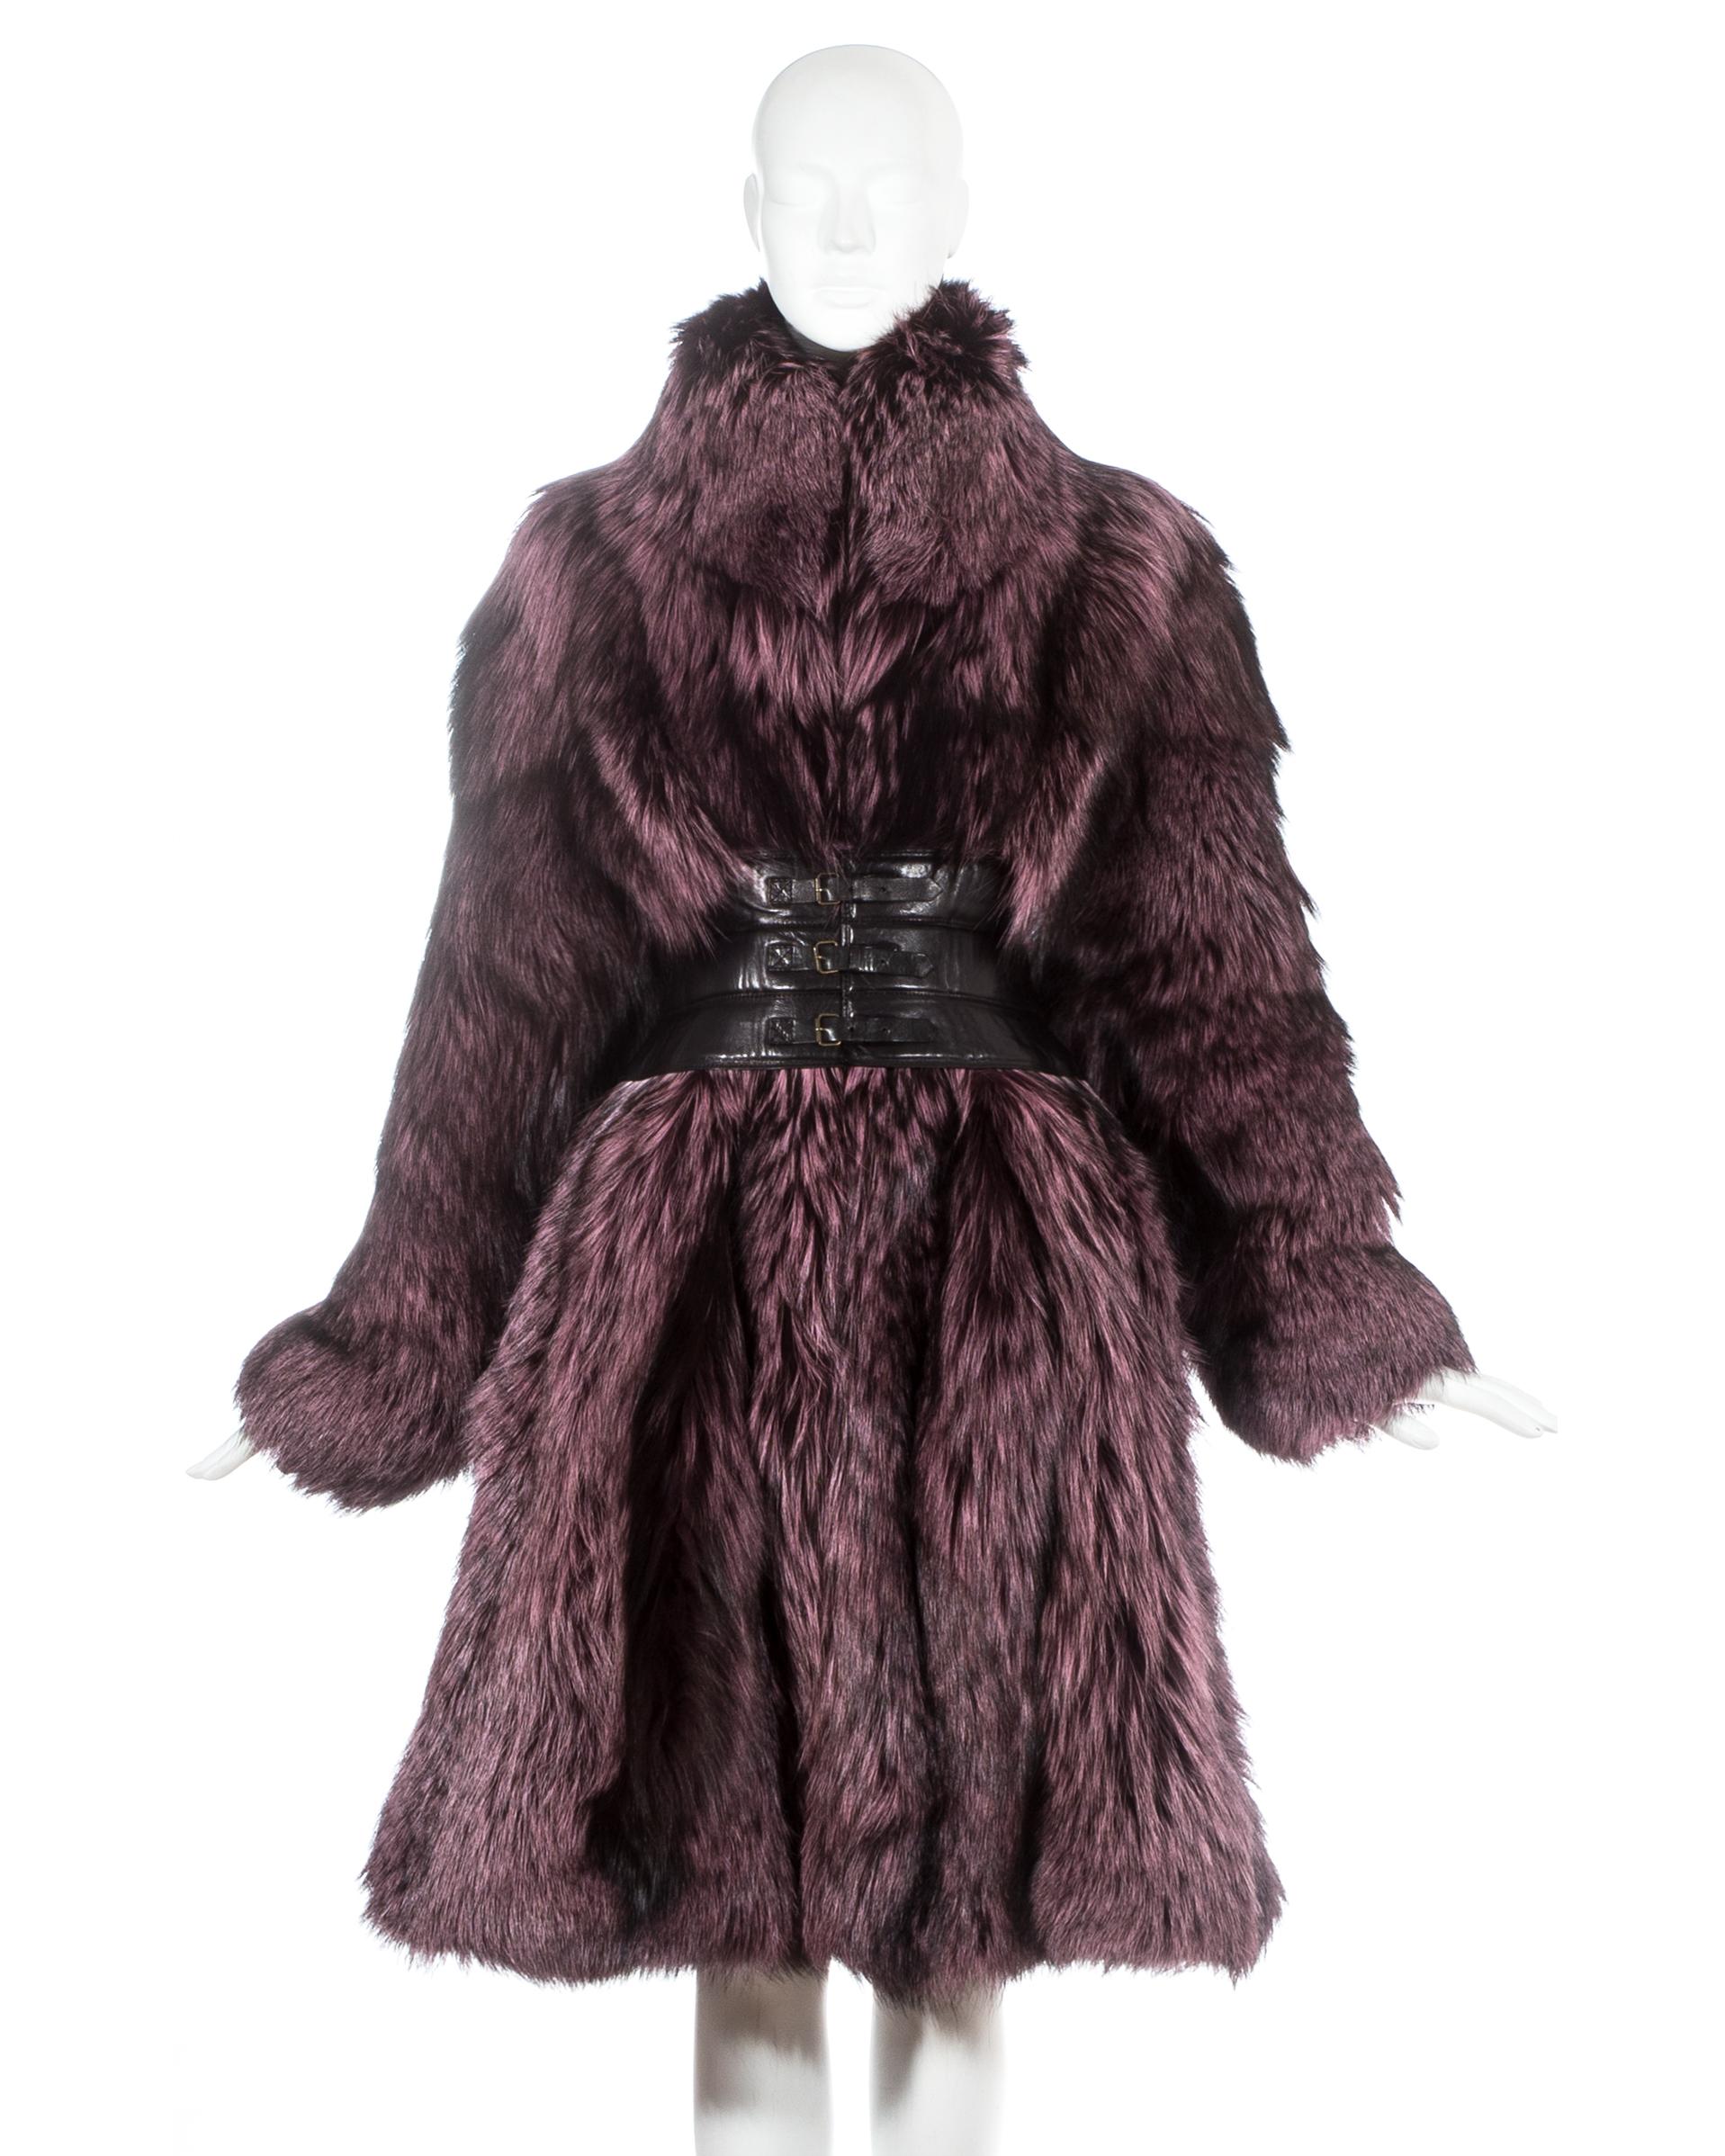 Alexander McQueen purple fox fur coat with black leather corset

Fall-Winter 2009